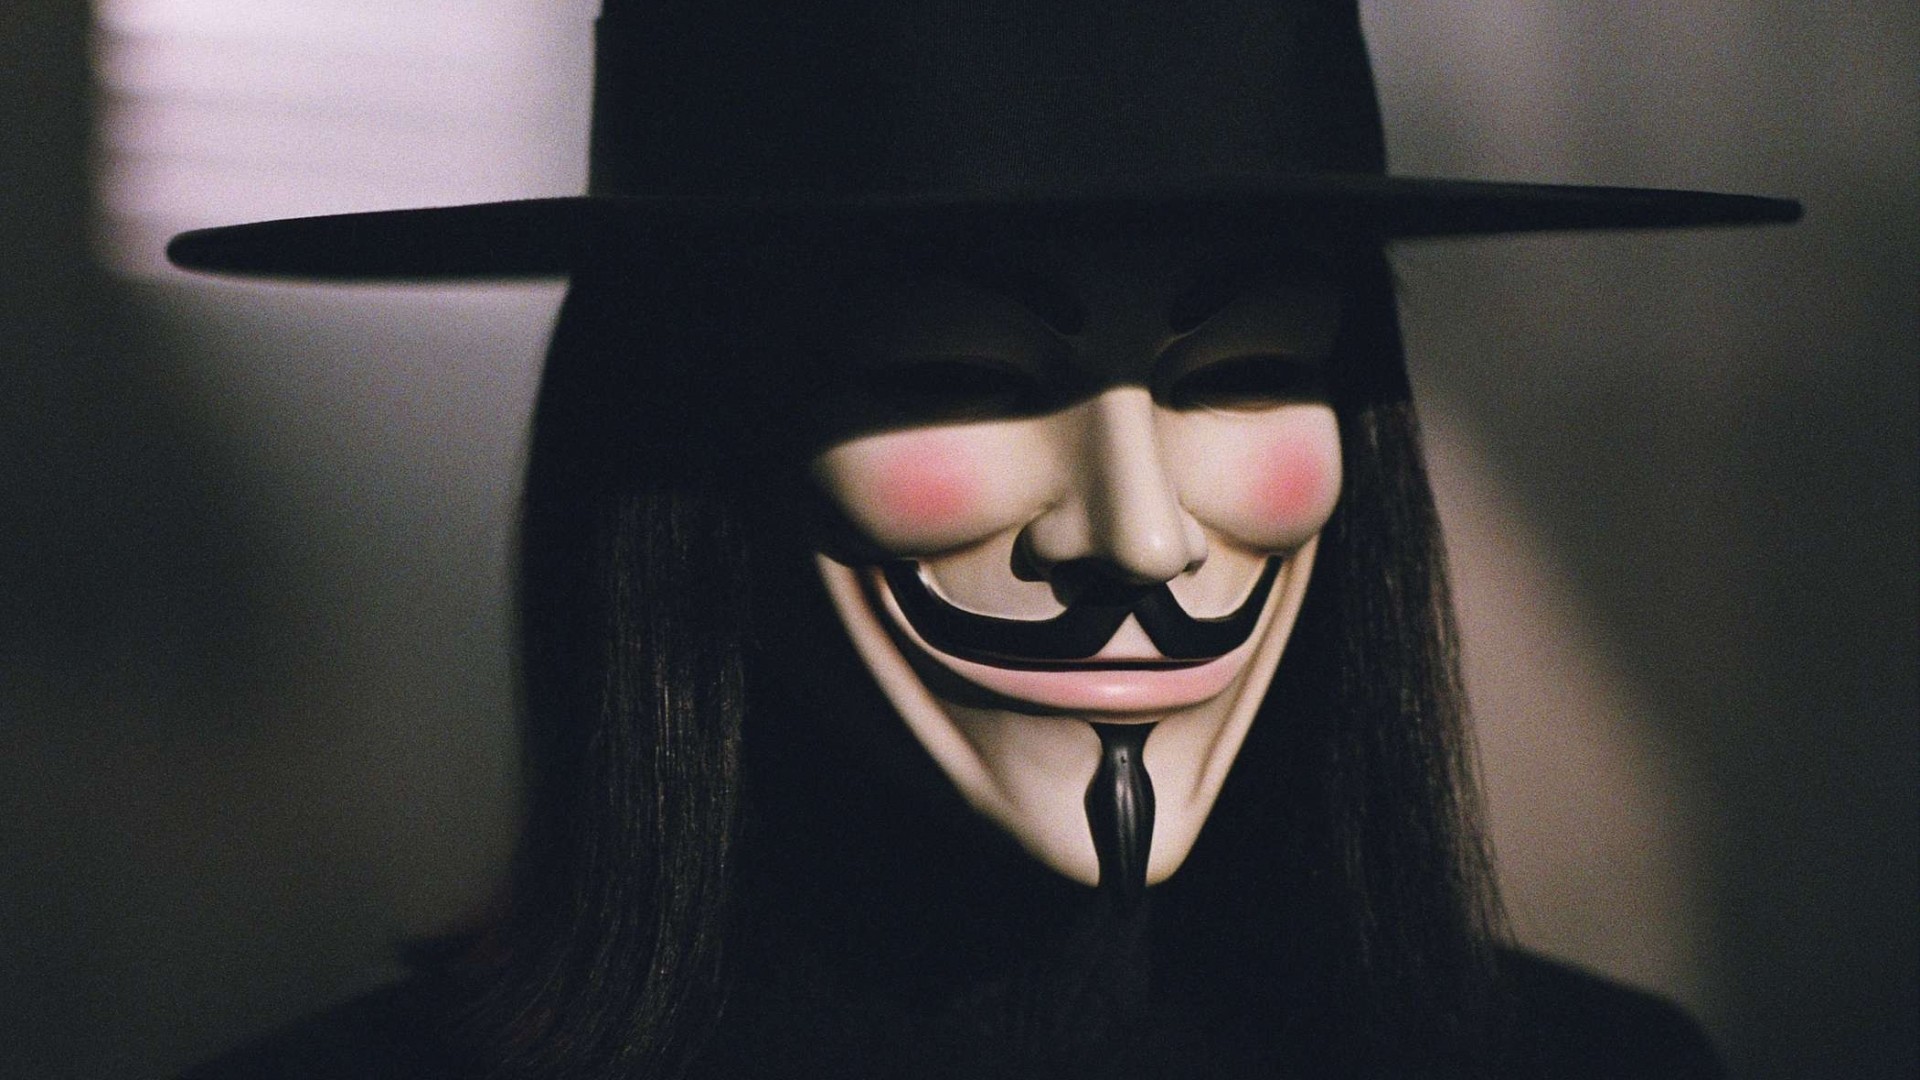 General 1920x1080 Guy Fawkes mask V for Vendetta mask face hat movies film stills